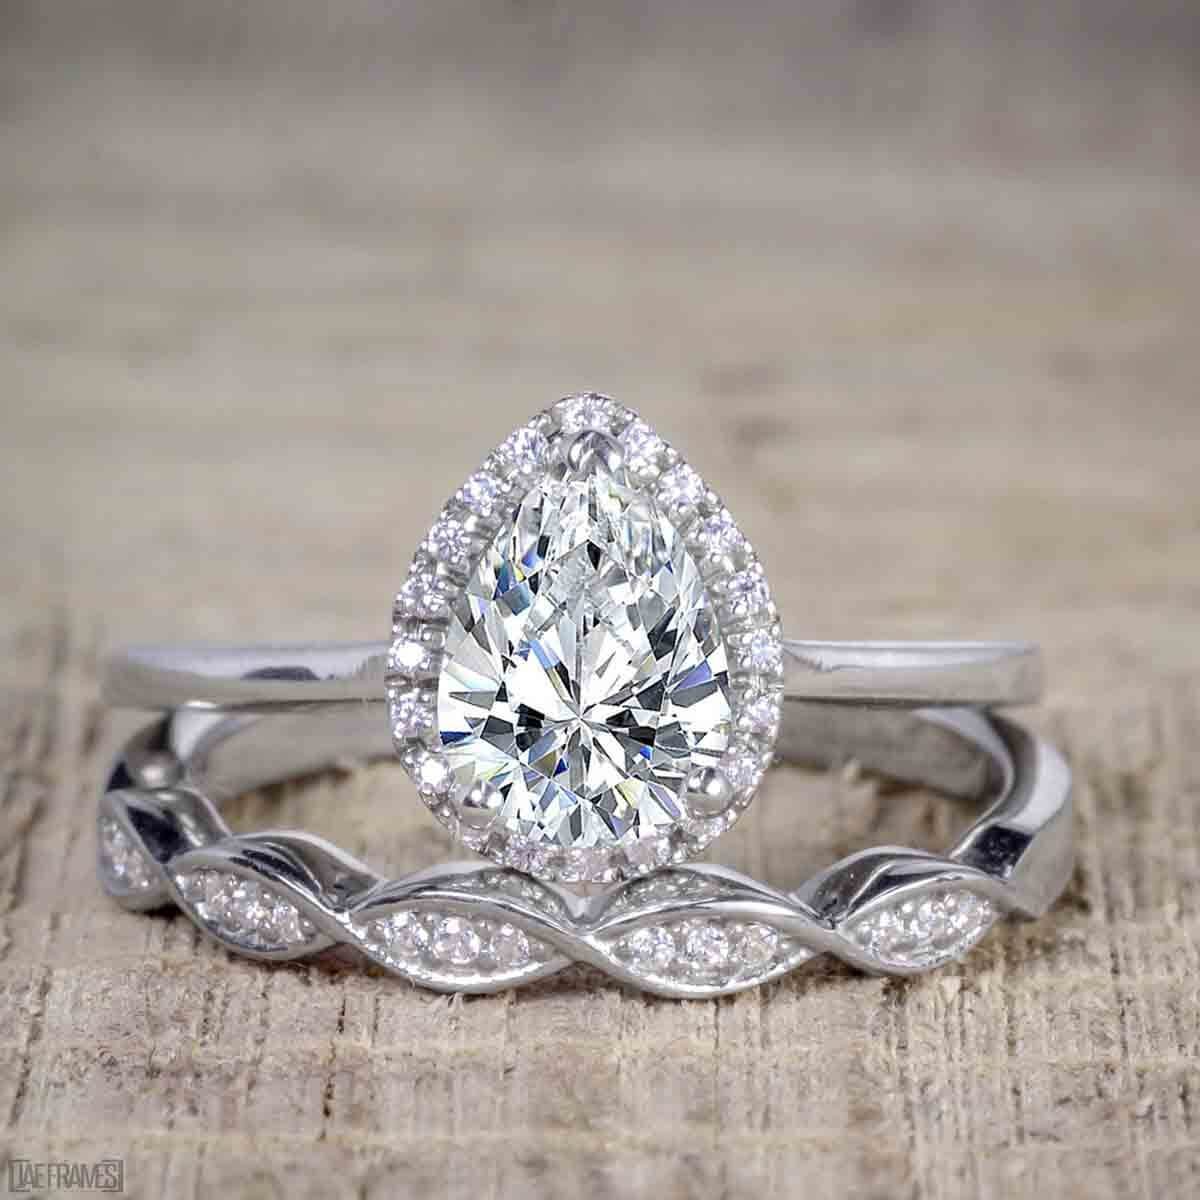 JeenJewels Best Seller Pear Cut 2.25 Carat Moissanite Diamond Wedding Trio Ring Set with 18k Gold Plating